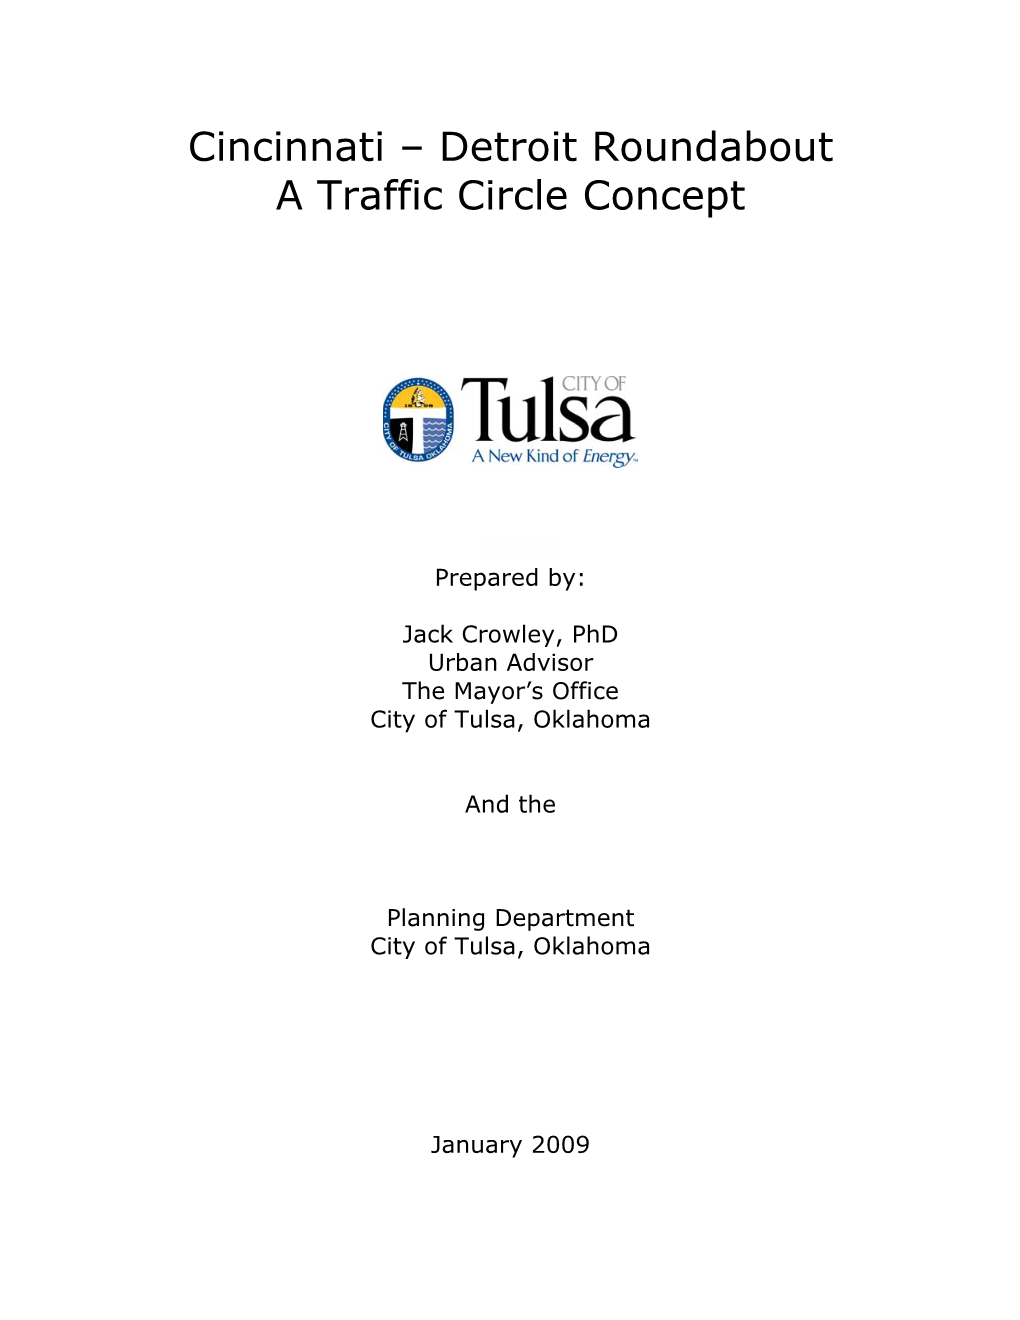 Cincinnati – Detroit Roundabout a Traffic Circle Concept